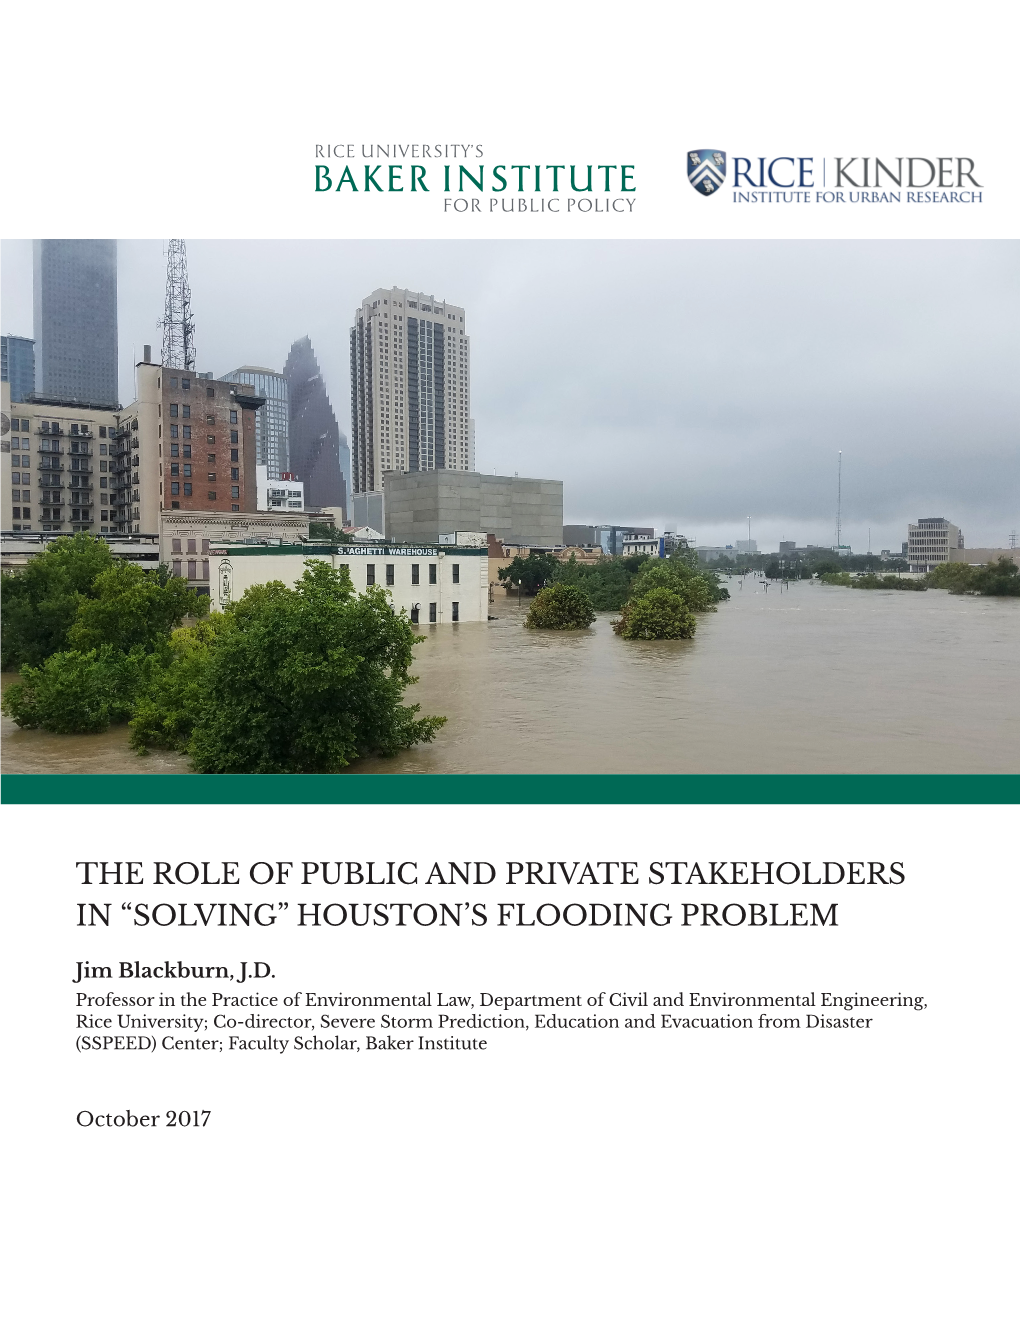 Houston's Flooding Problem